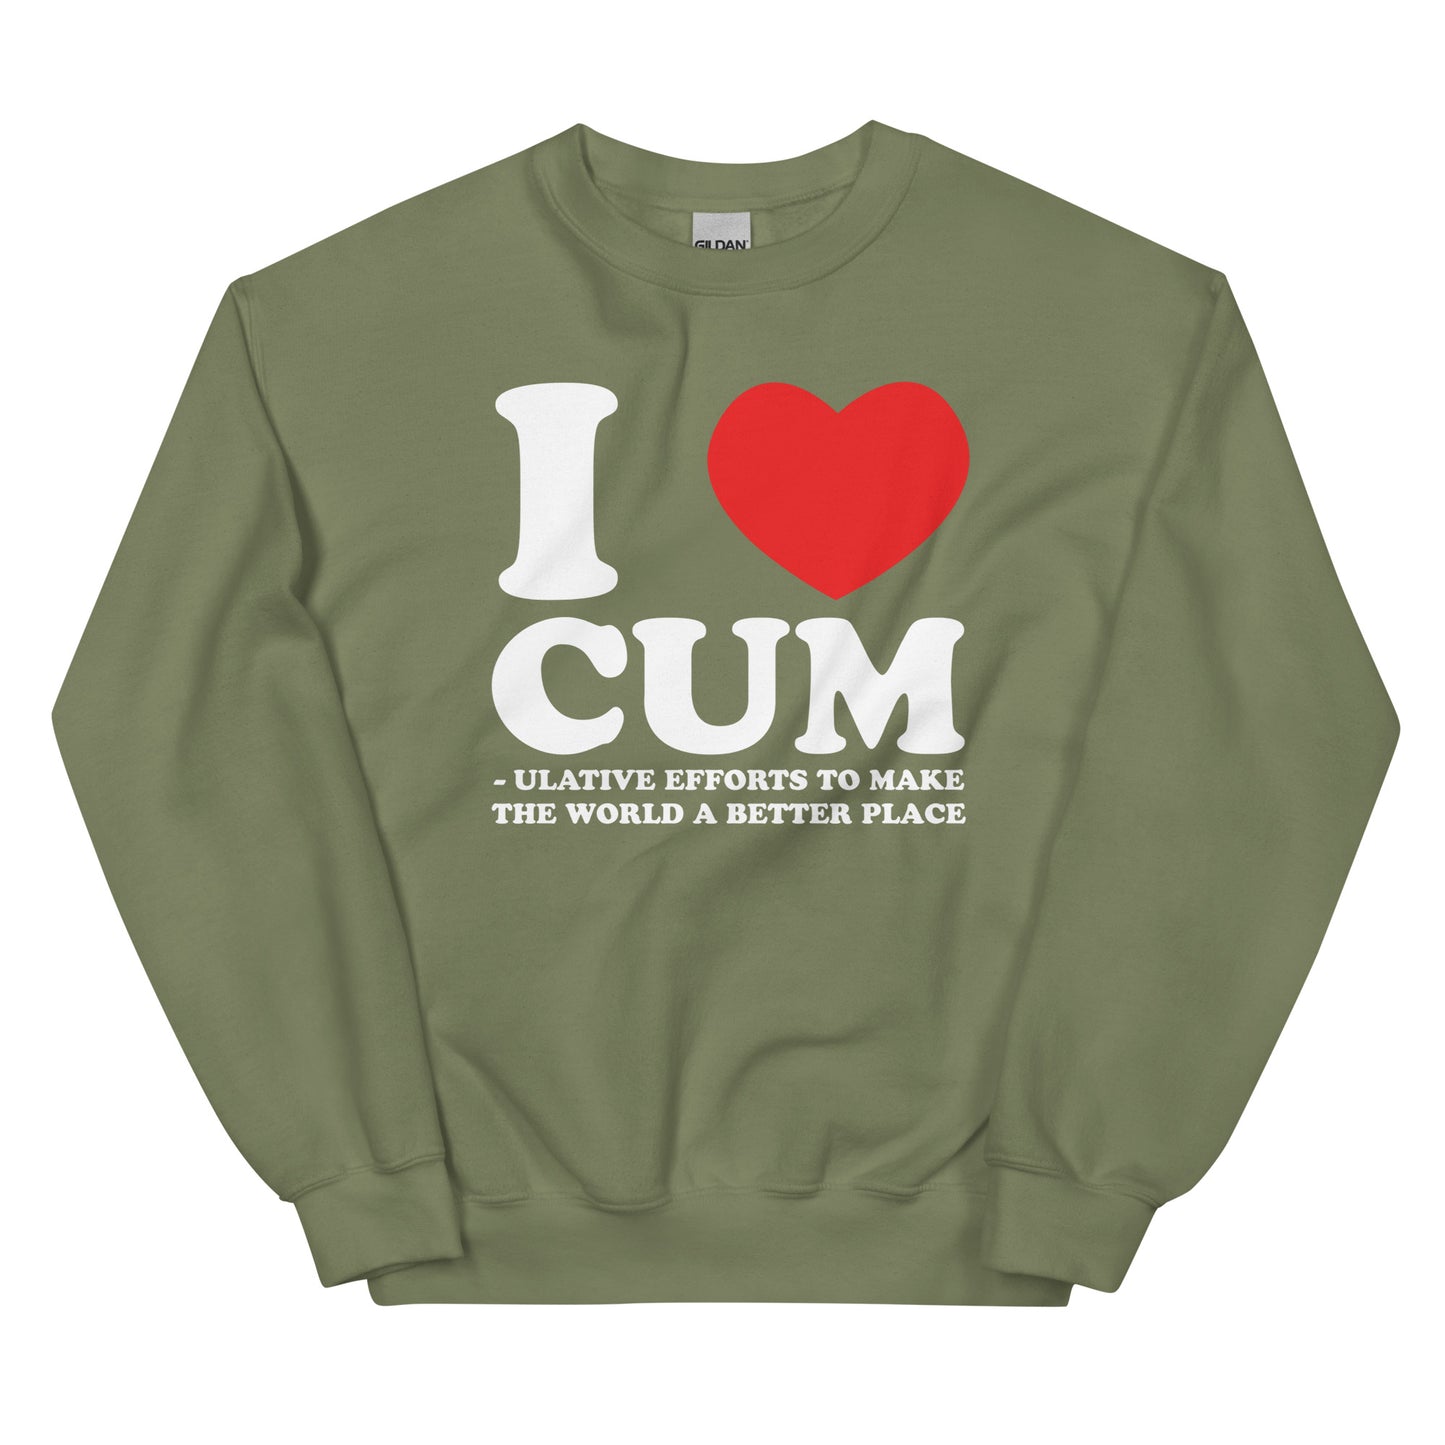 I Heart Cum(ulative Efforts) Unisex Sweatshirt